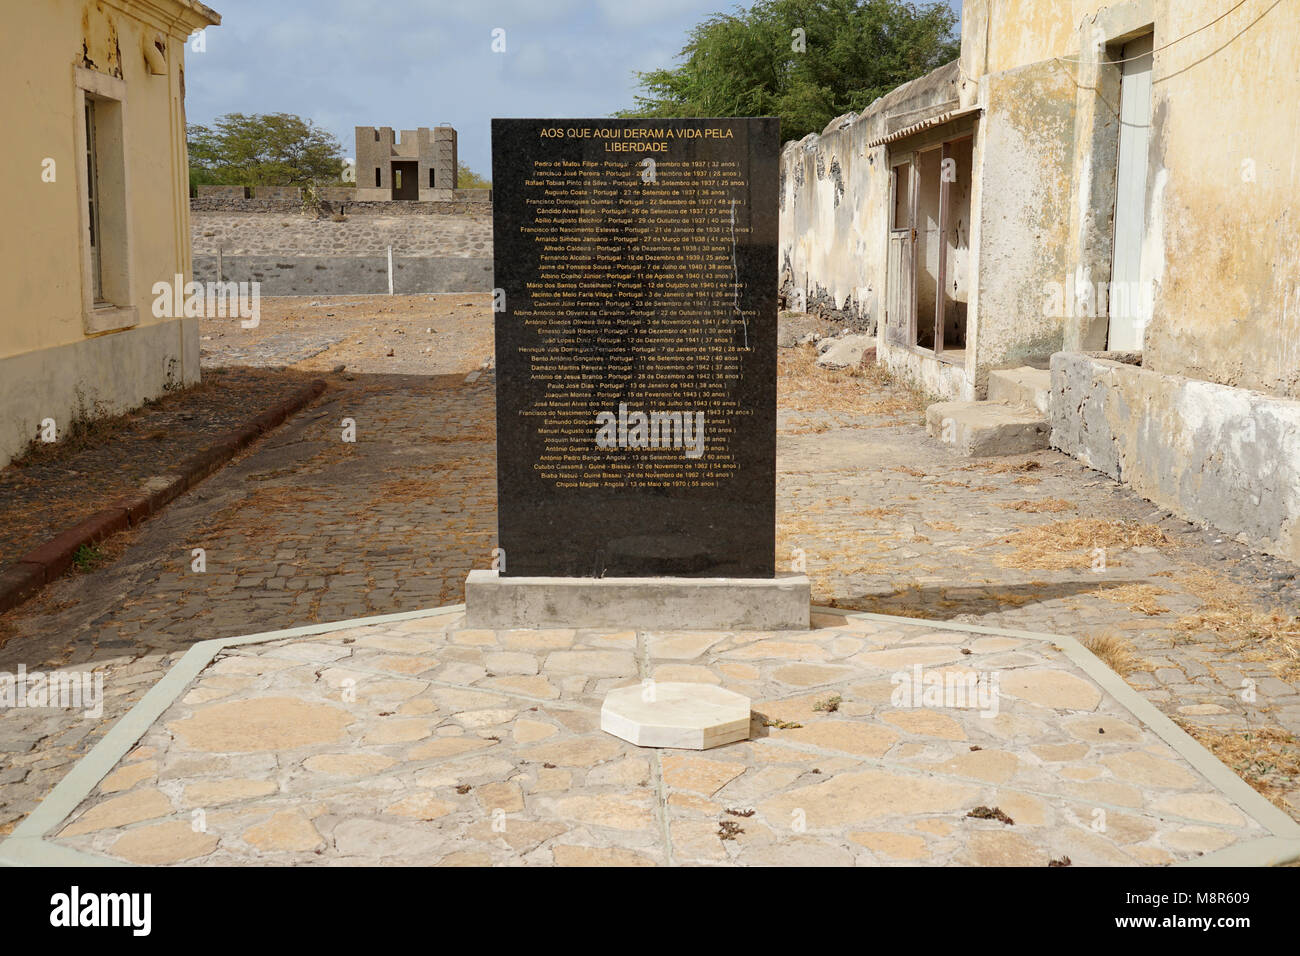 Memorial Tablet: 'Aos que aqui deram a vida pela liberdade', museu do Tarrafal, Tarrafal Camp, Tarrafal, Santiago Island, Cape Verde, Africa Stock Photo